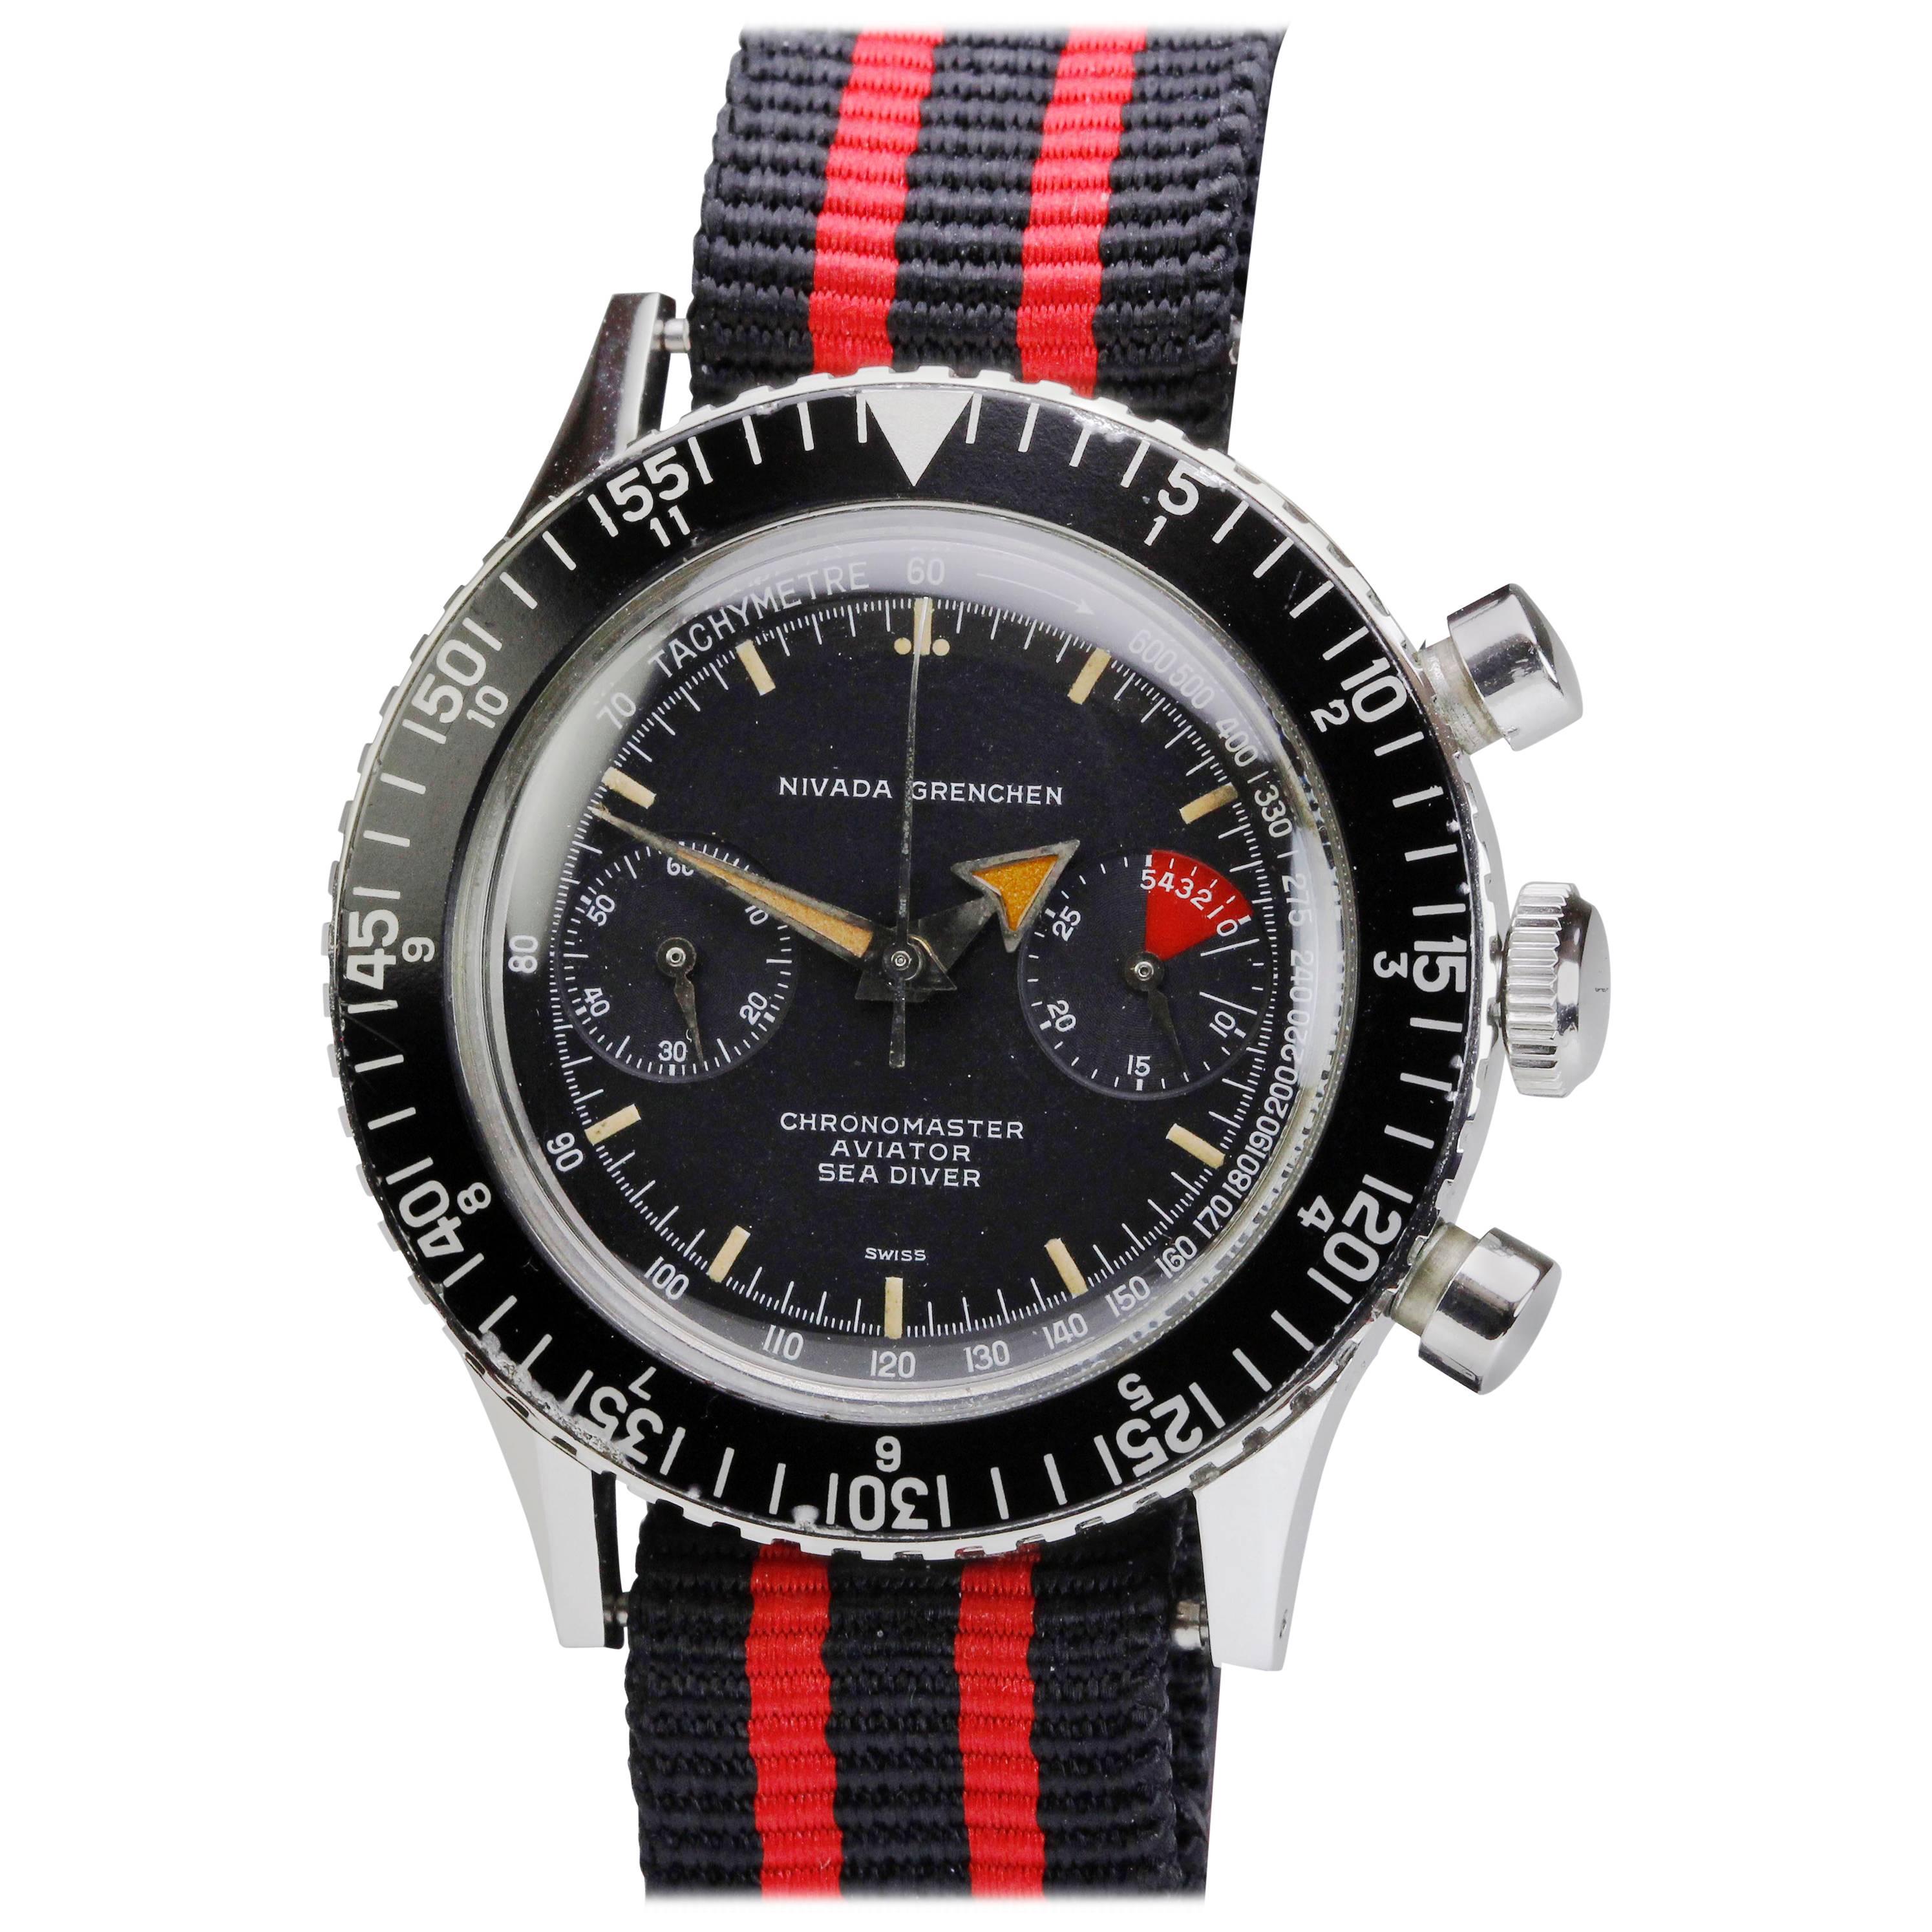 Nivada Grenchen Stainless Steel Chronomaster Aviator Sea Diver Wristwatch